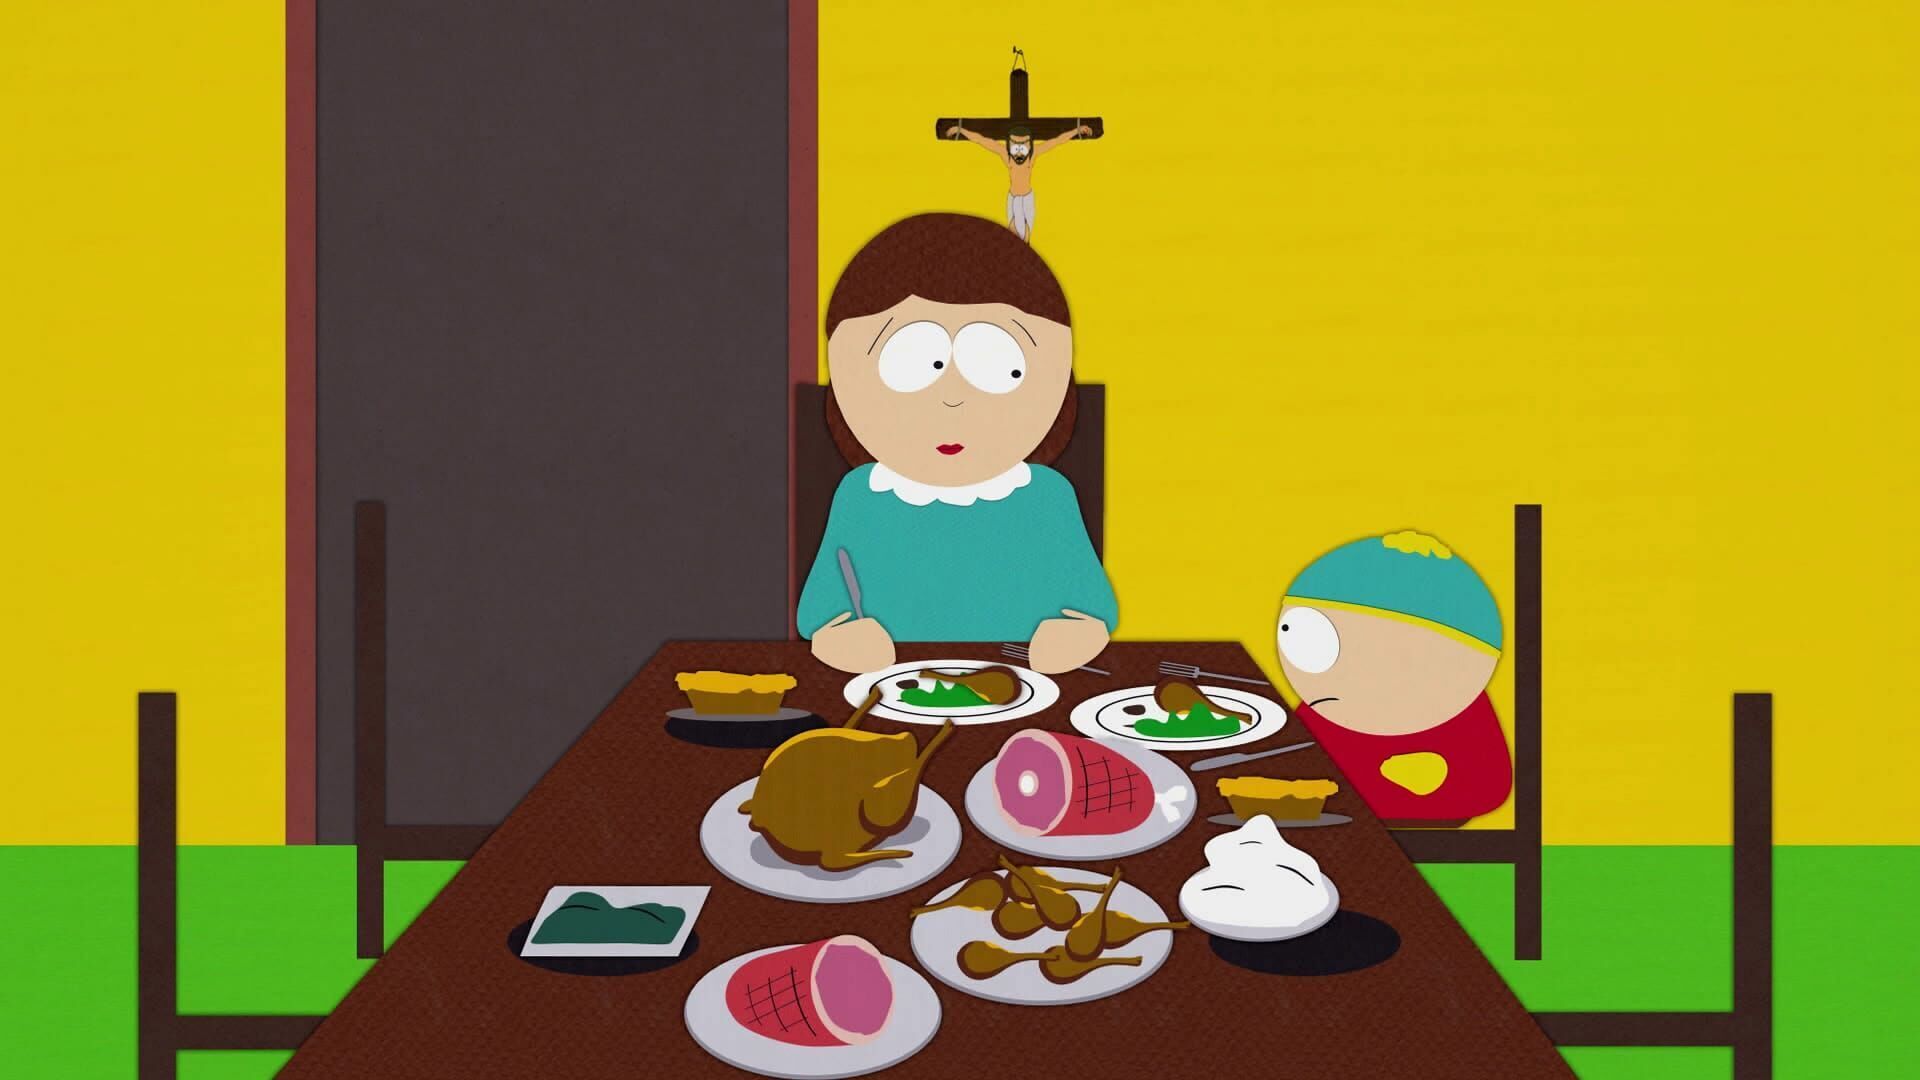 South Park - Cartman's Mom is a Dirty Slut